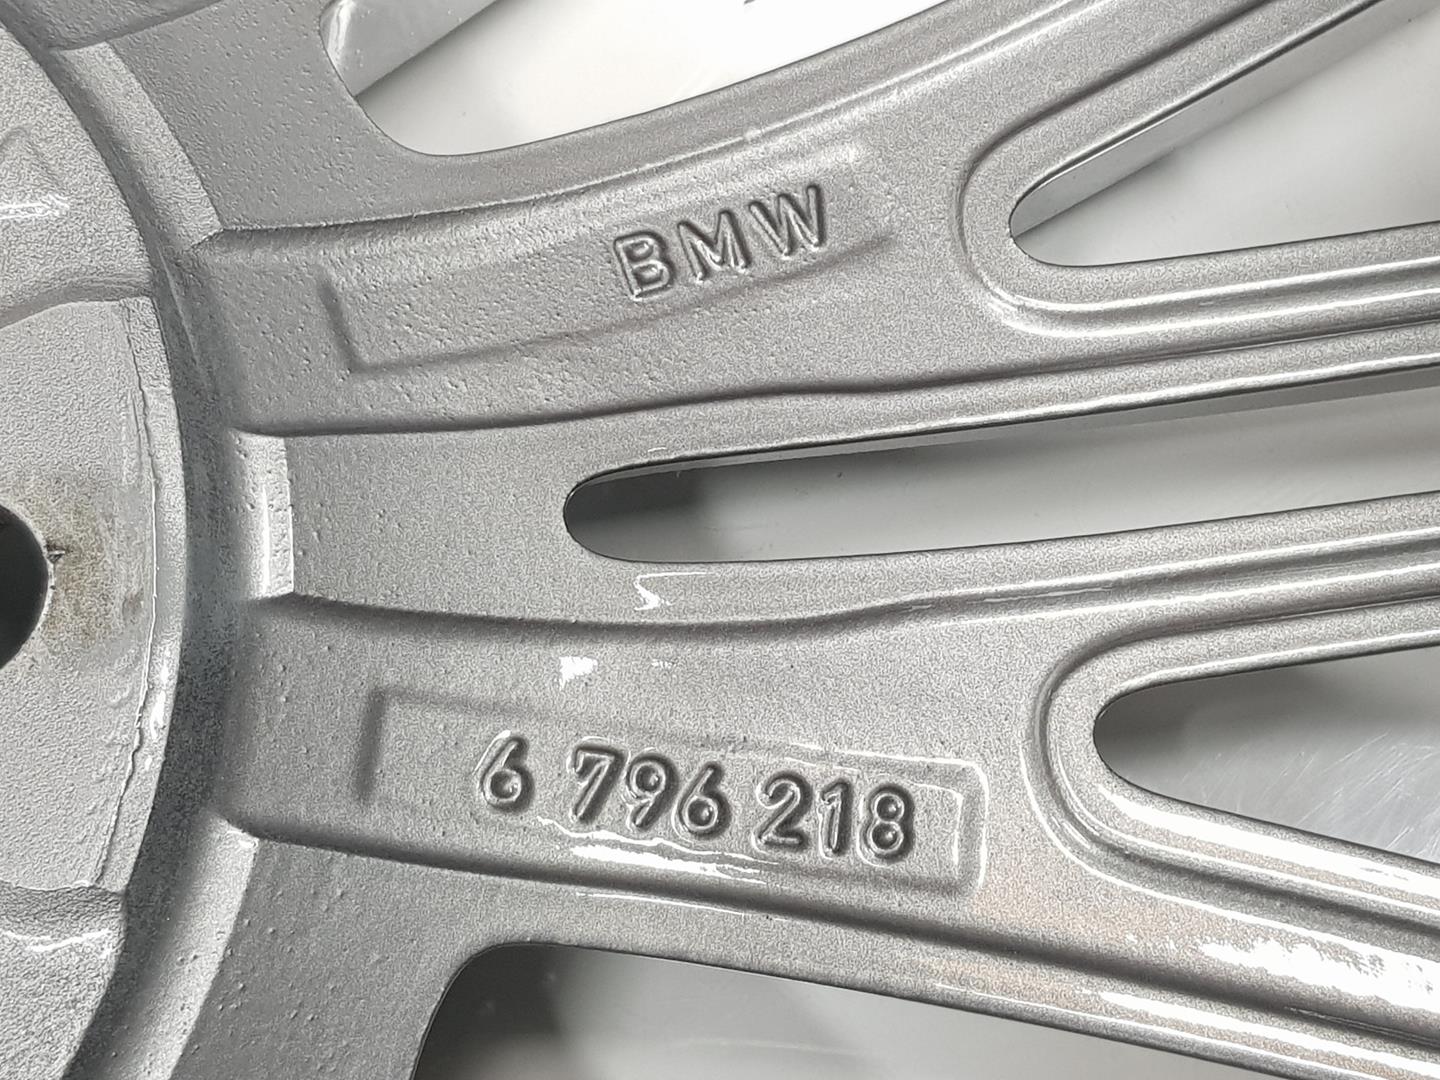 BMW 1 Series F20/F21 (2011-2020) Колесо 6796218, 7.5JX18, 18PULGADAS 24251222